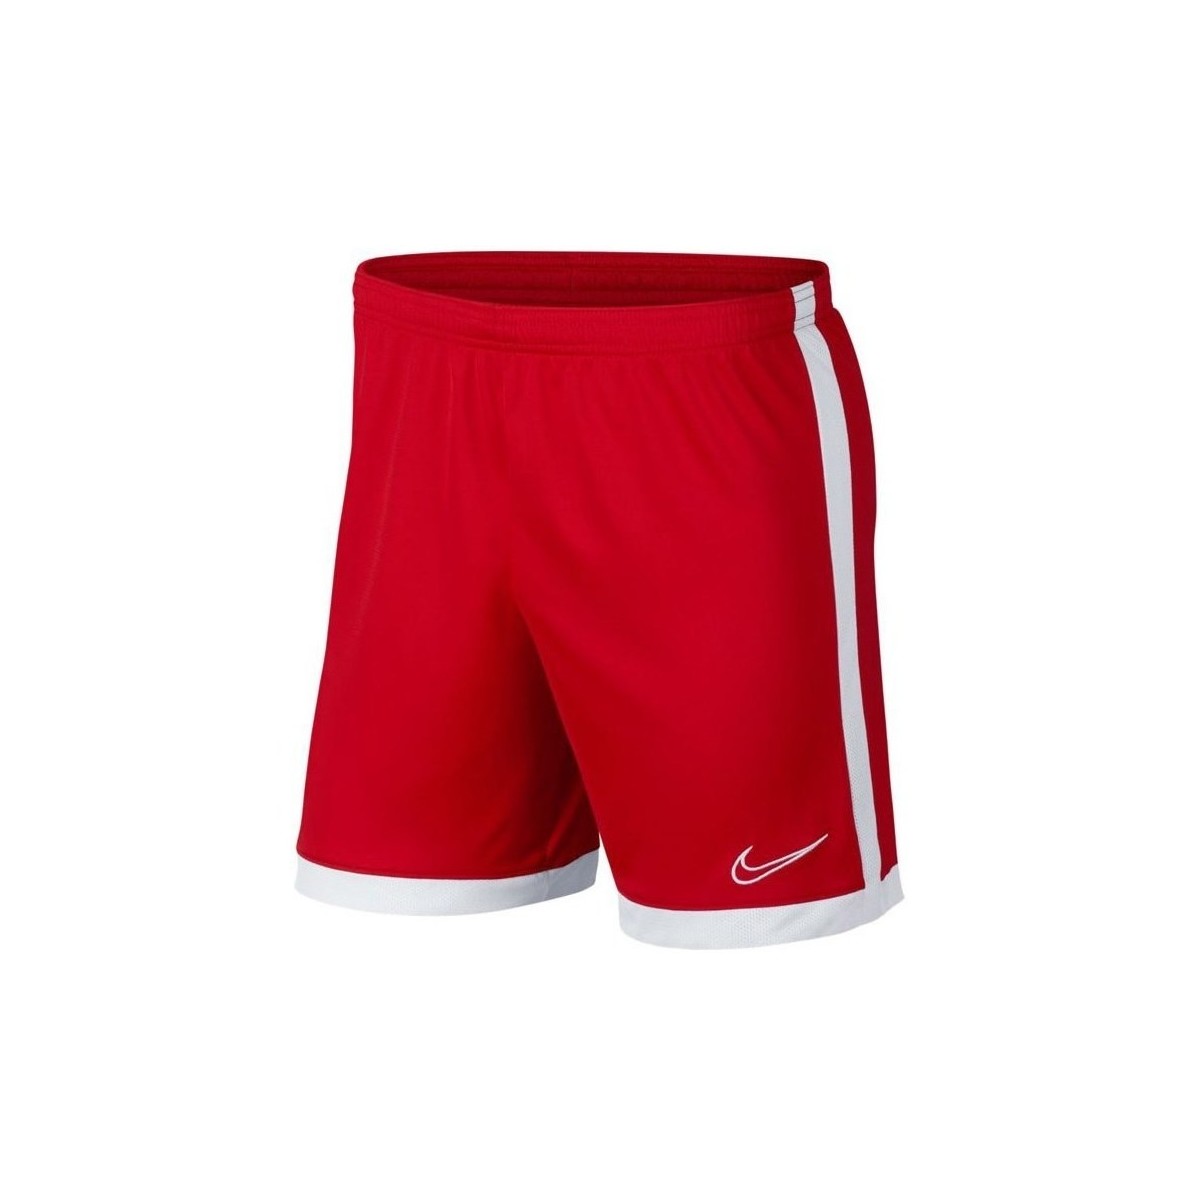 Îmbracaminte Bărbați Pantaloni trei sferturi Nike Dry Academy roșu